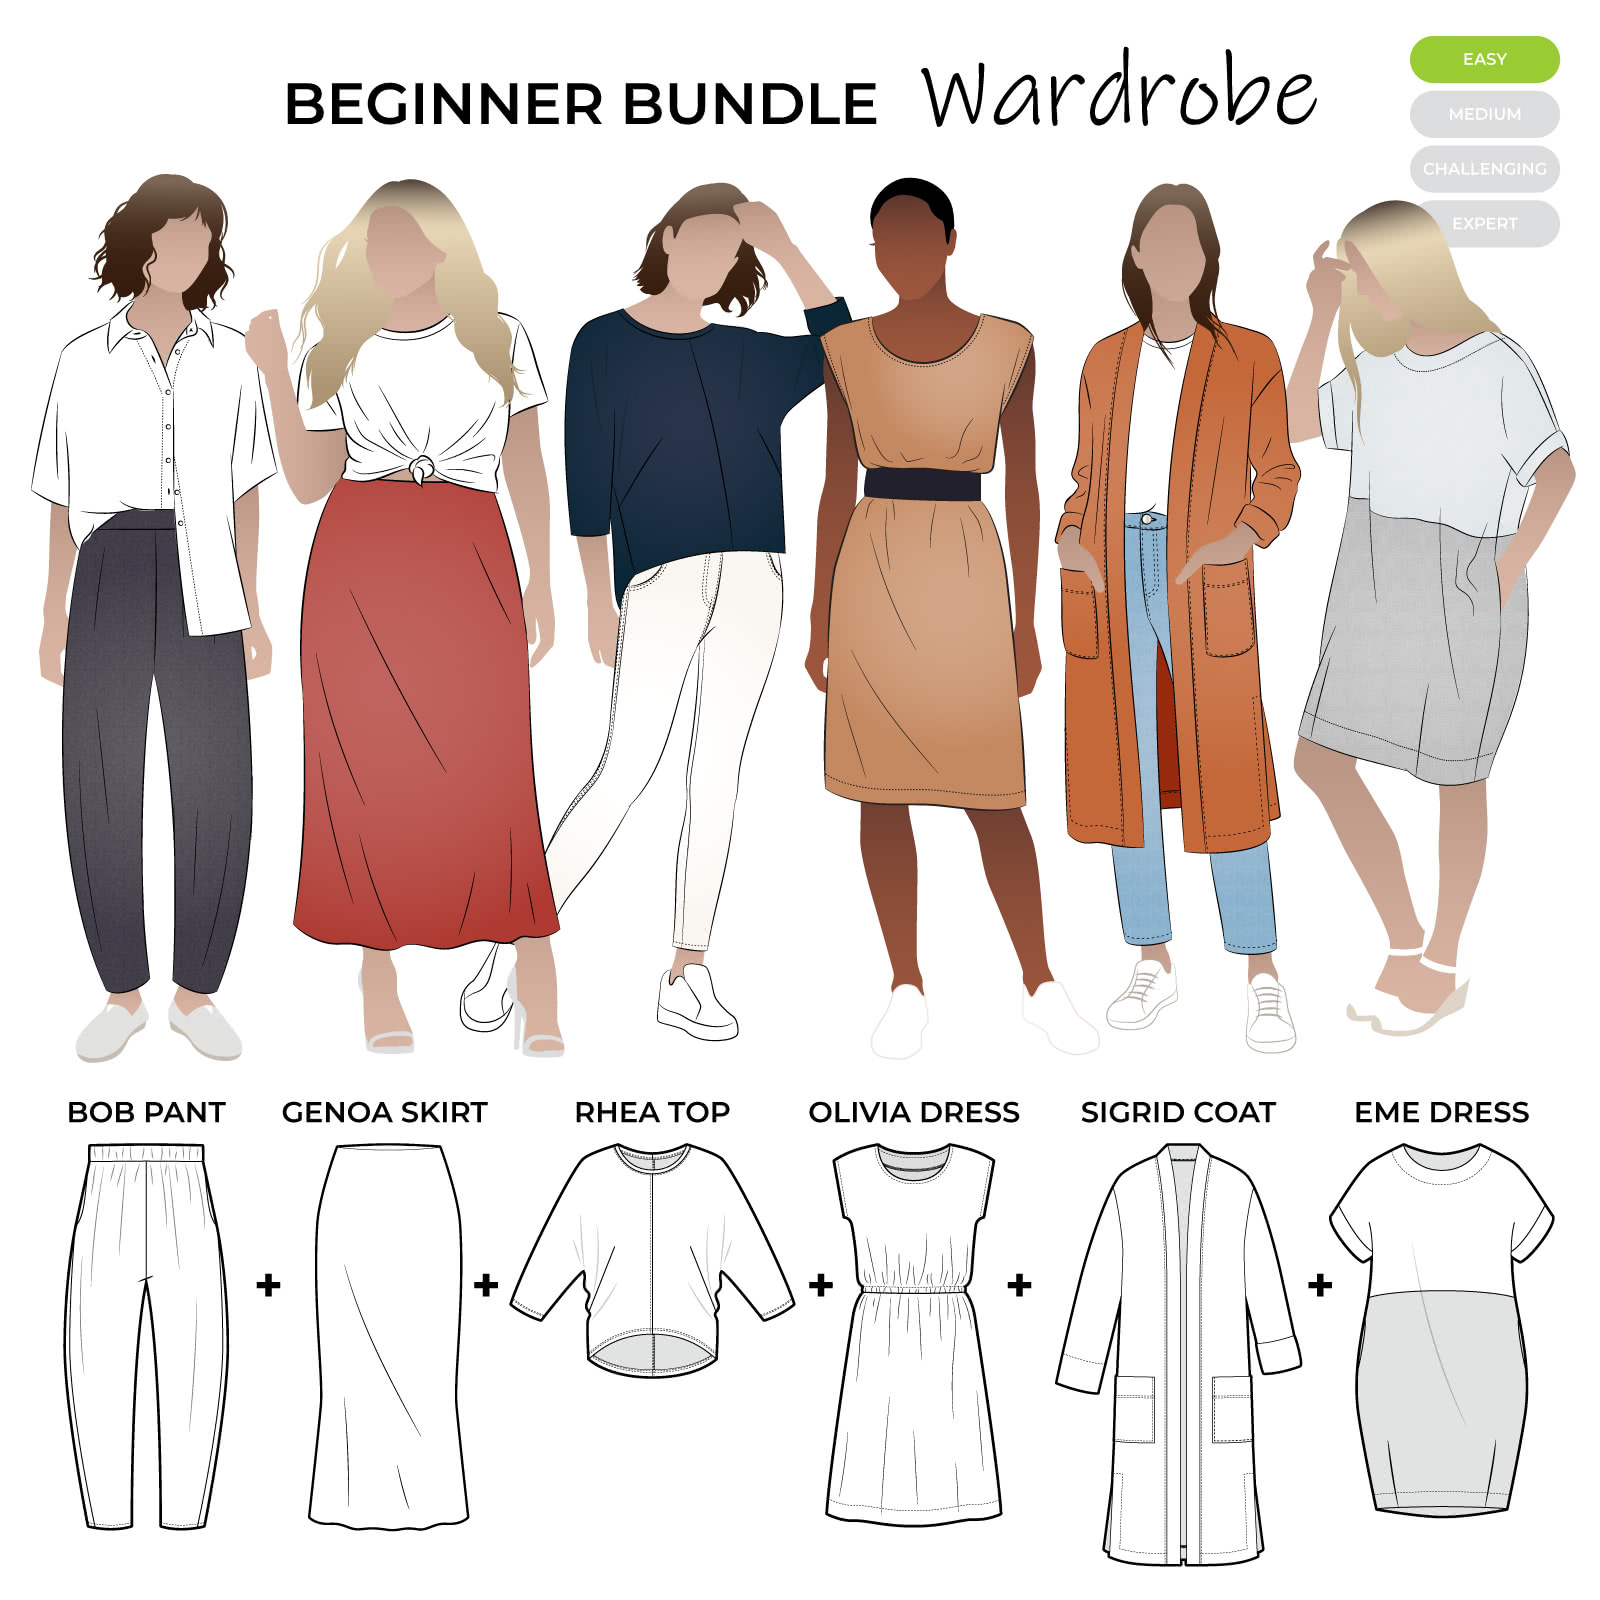 Beginner Bundle Wardrobe Sewing Pattern Bundle By Style Arc - 6 beginner friendly patterns to start sewing your me made wardrobe.